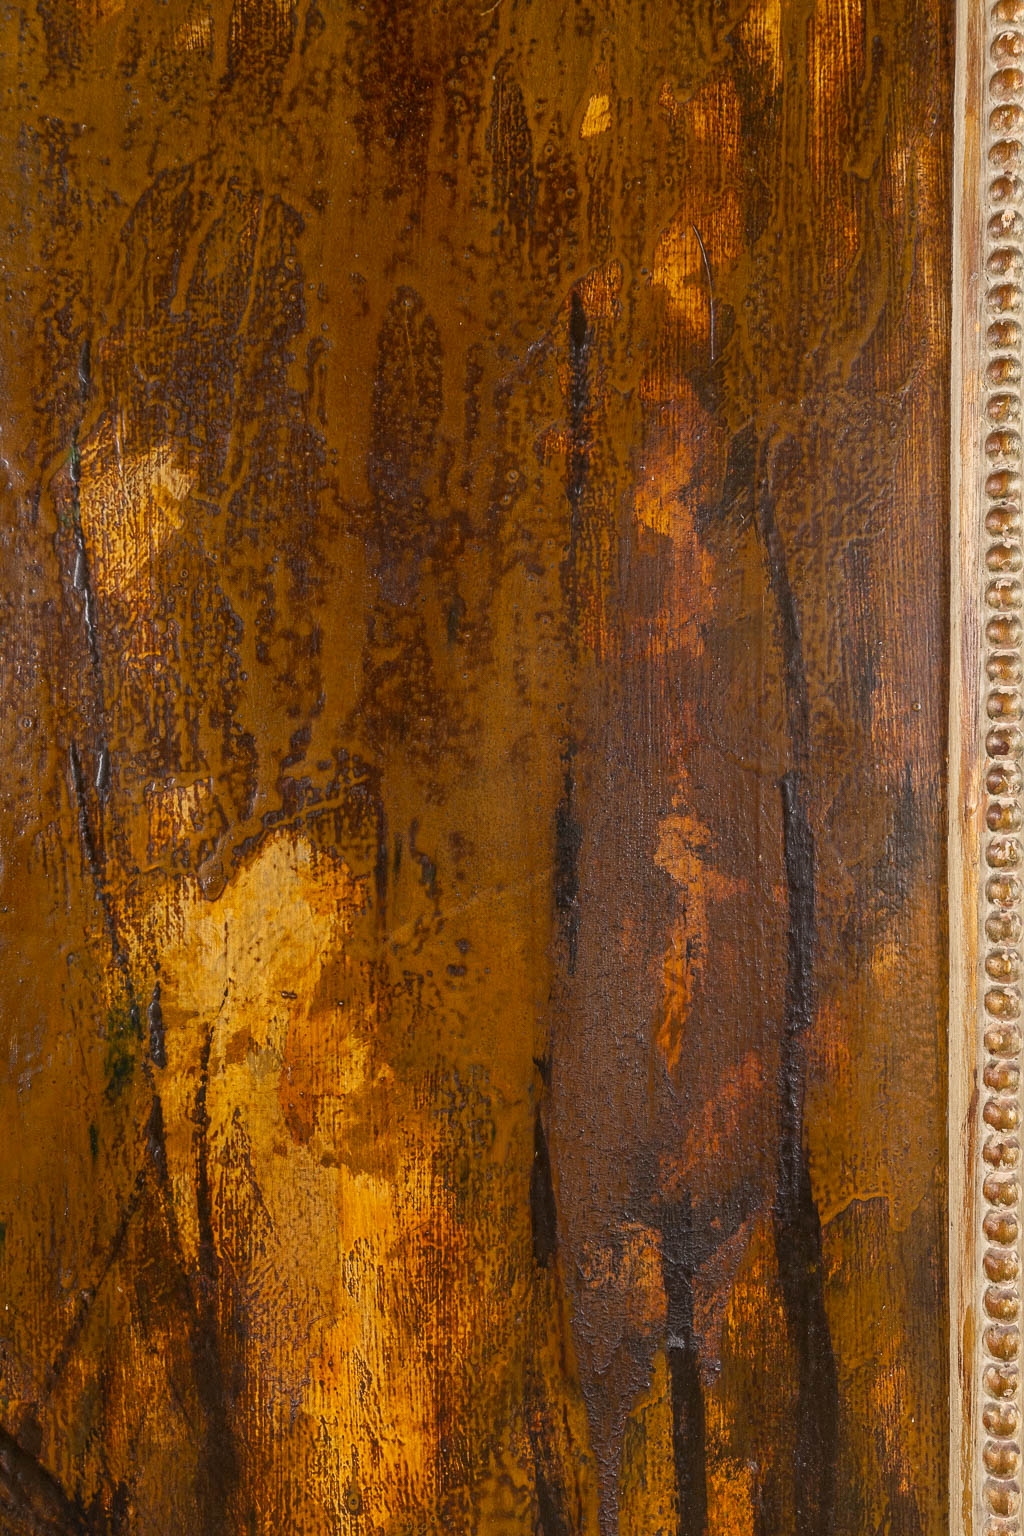 Paul HAGEMANS (1884-1959) 'Spring' oil on board. (W:87 x H:118 cm)